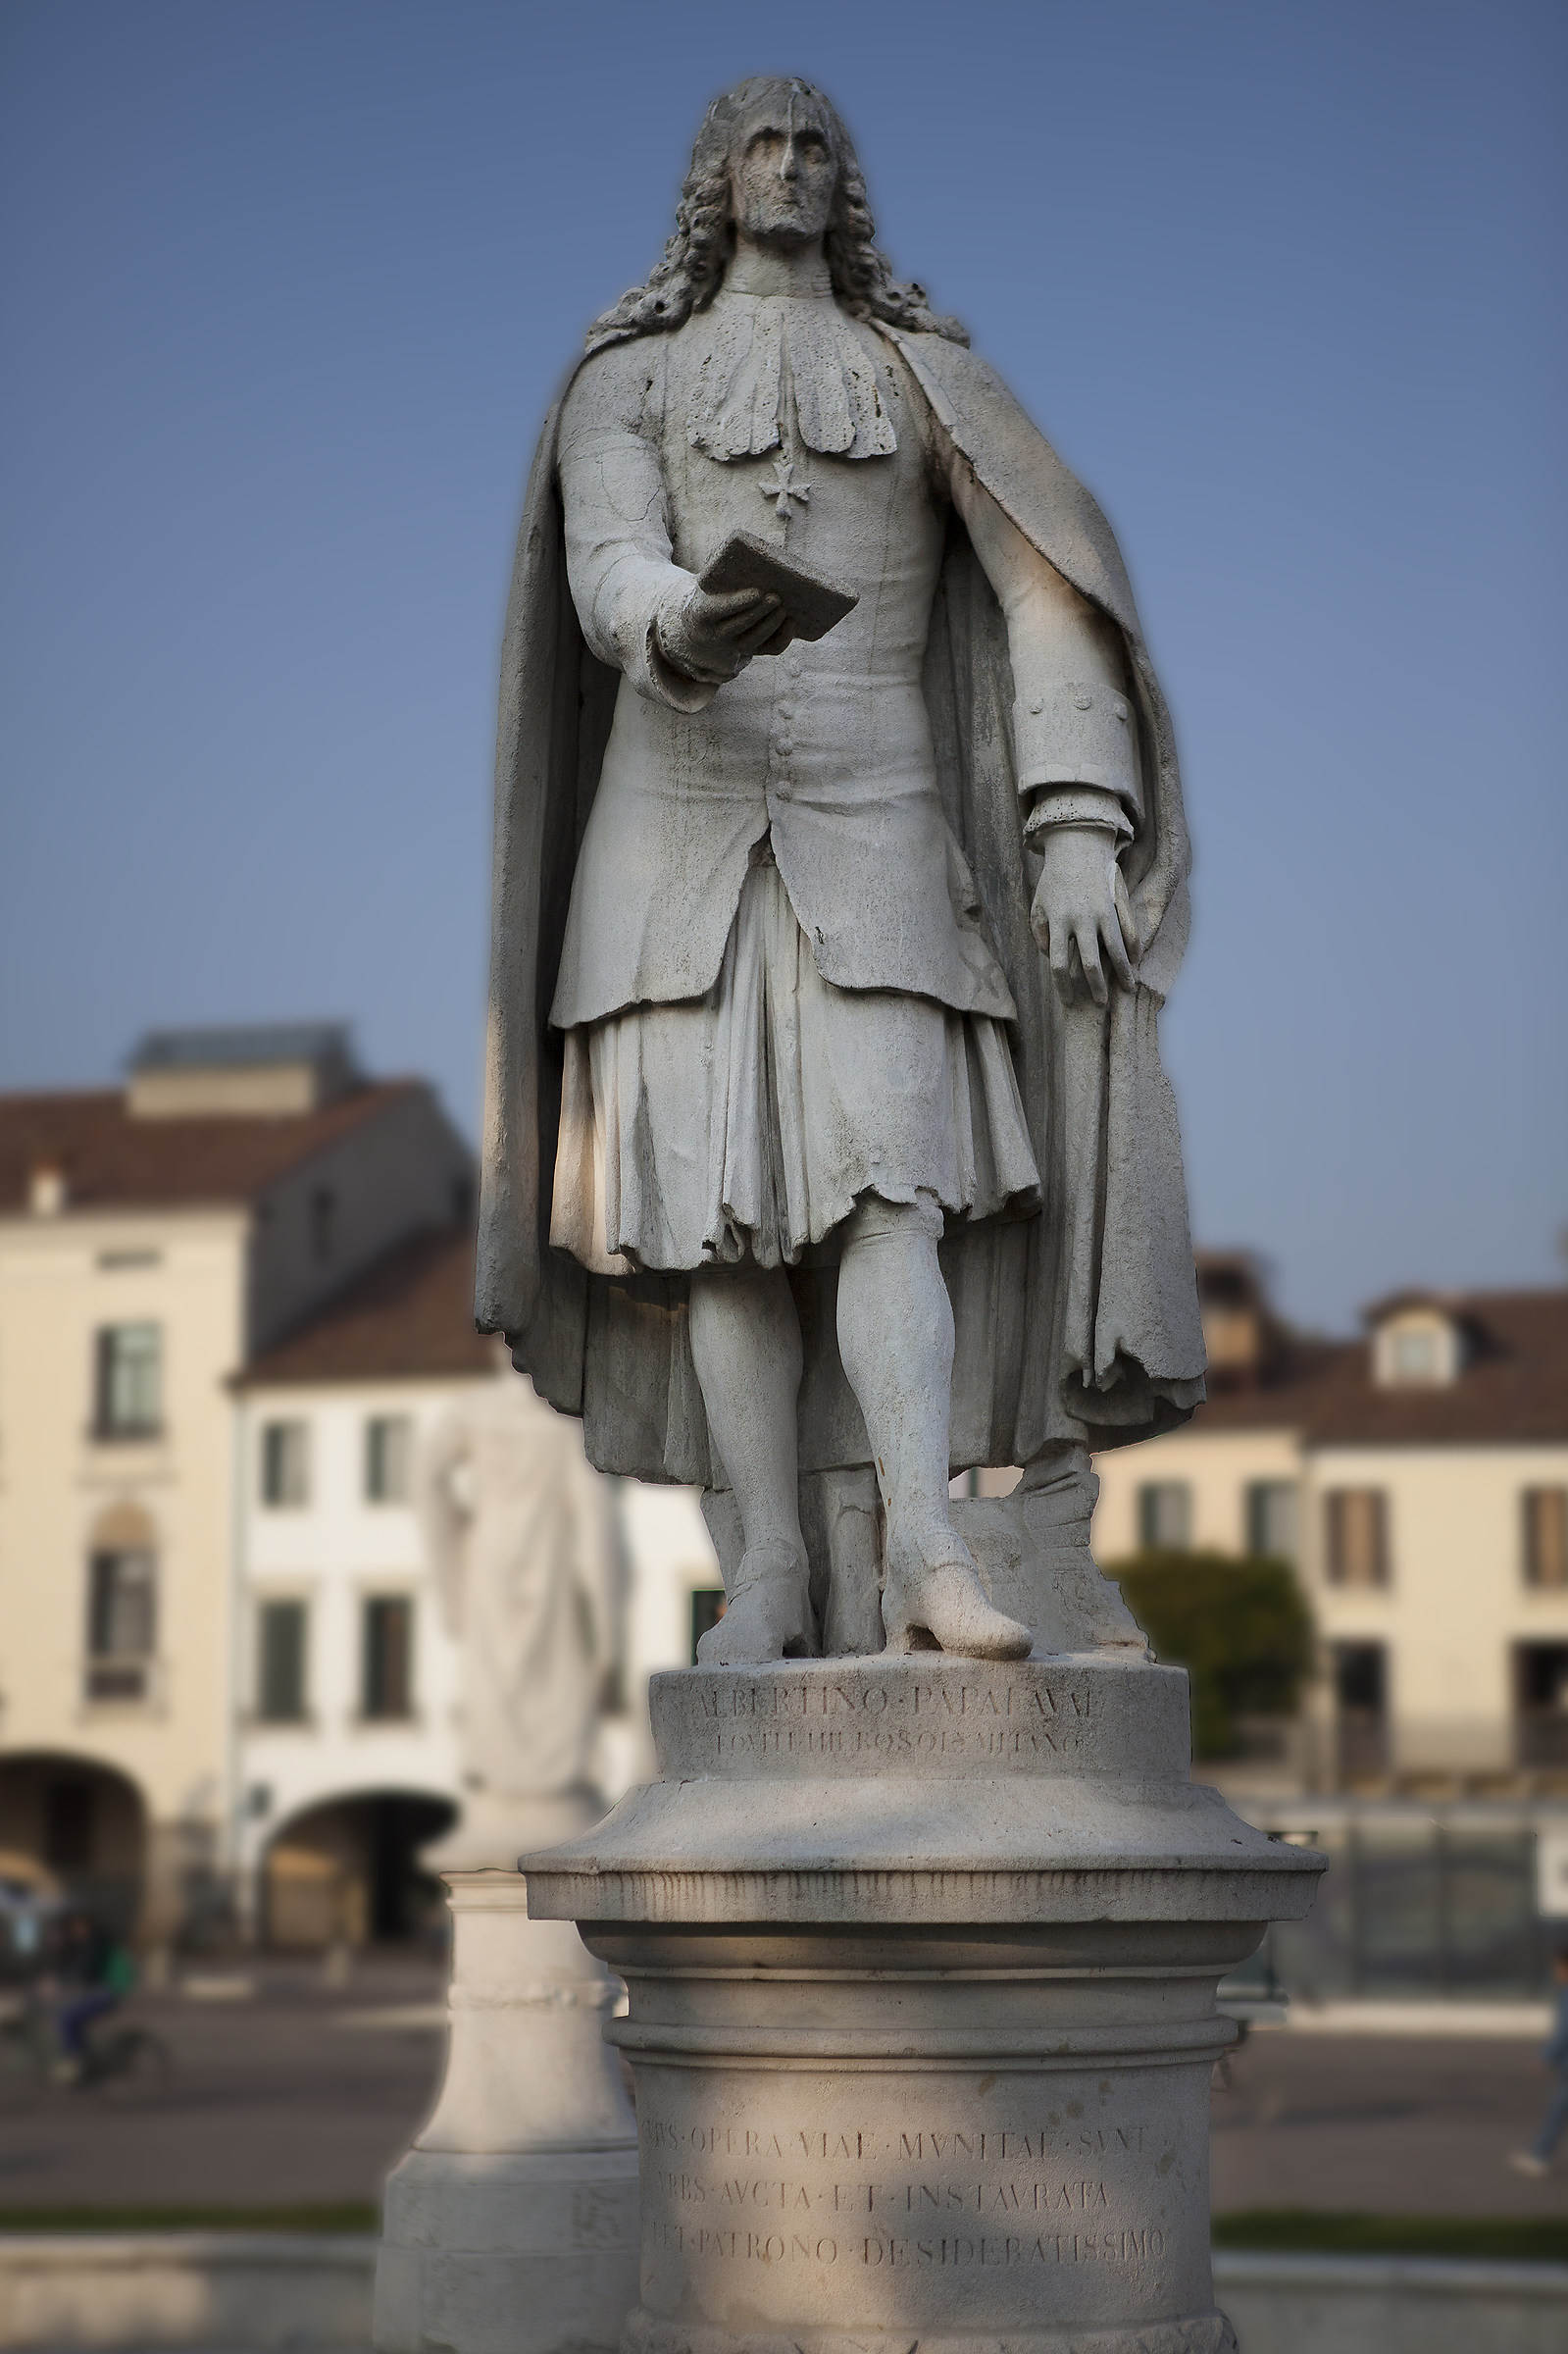 La statua (Albertino Papafava)...